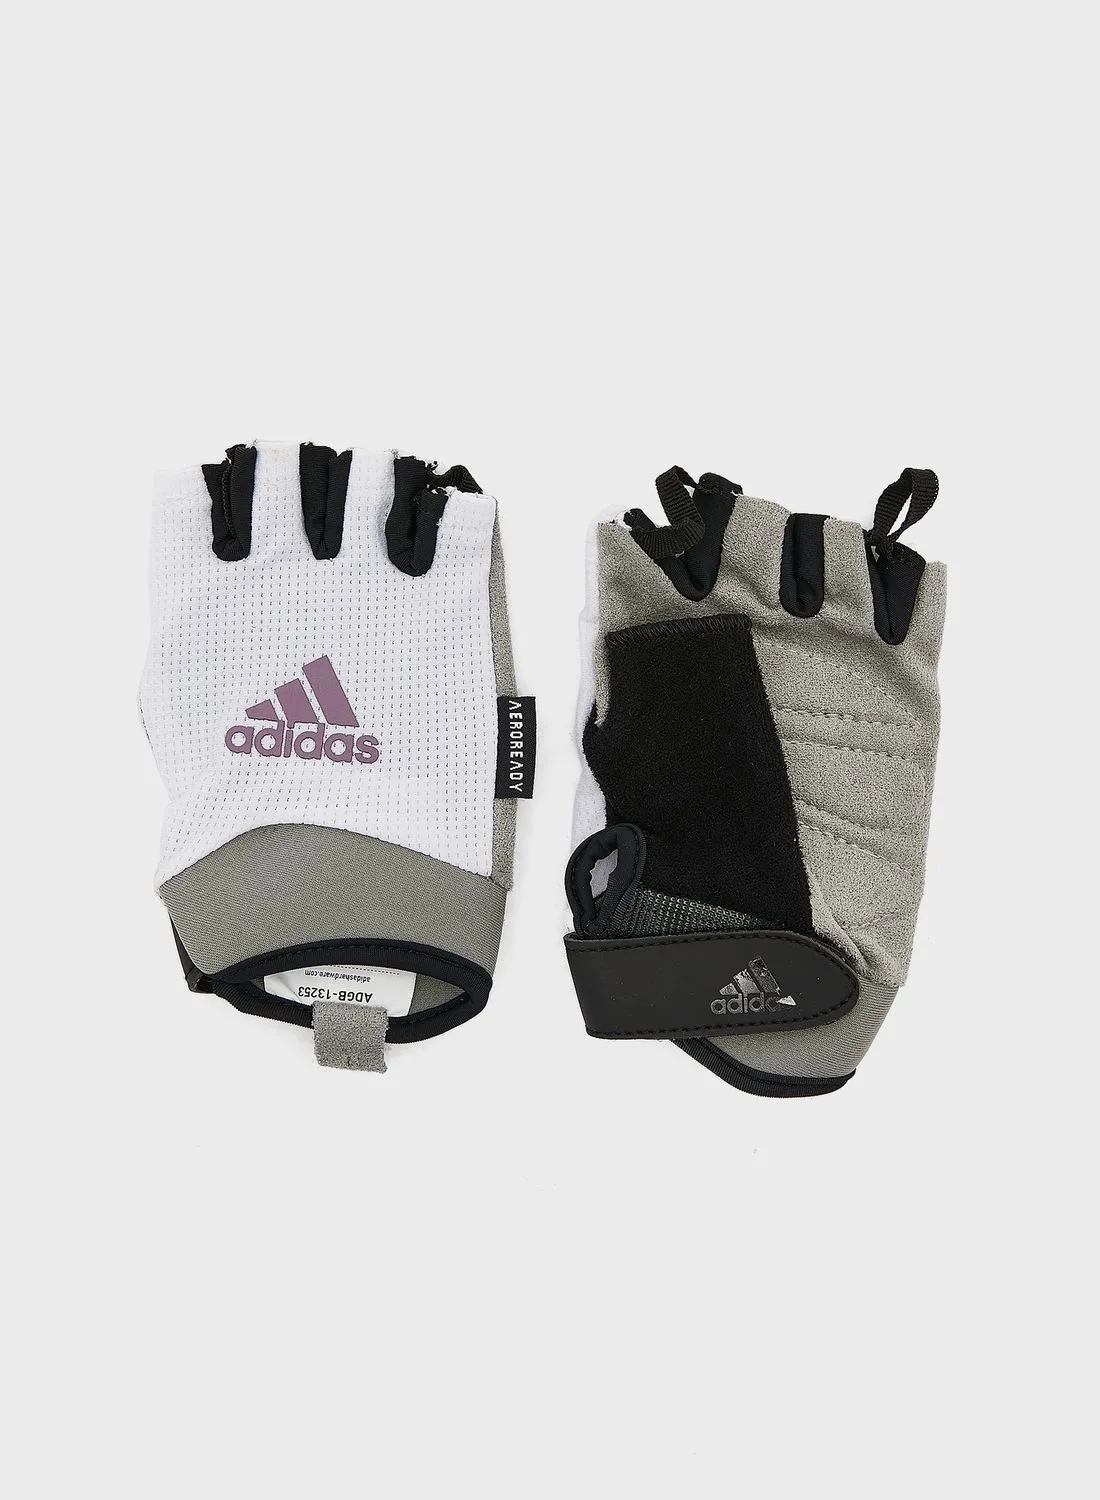 Adidas Performance Women's Gloves -S